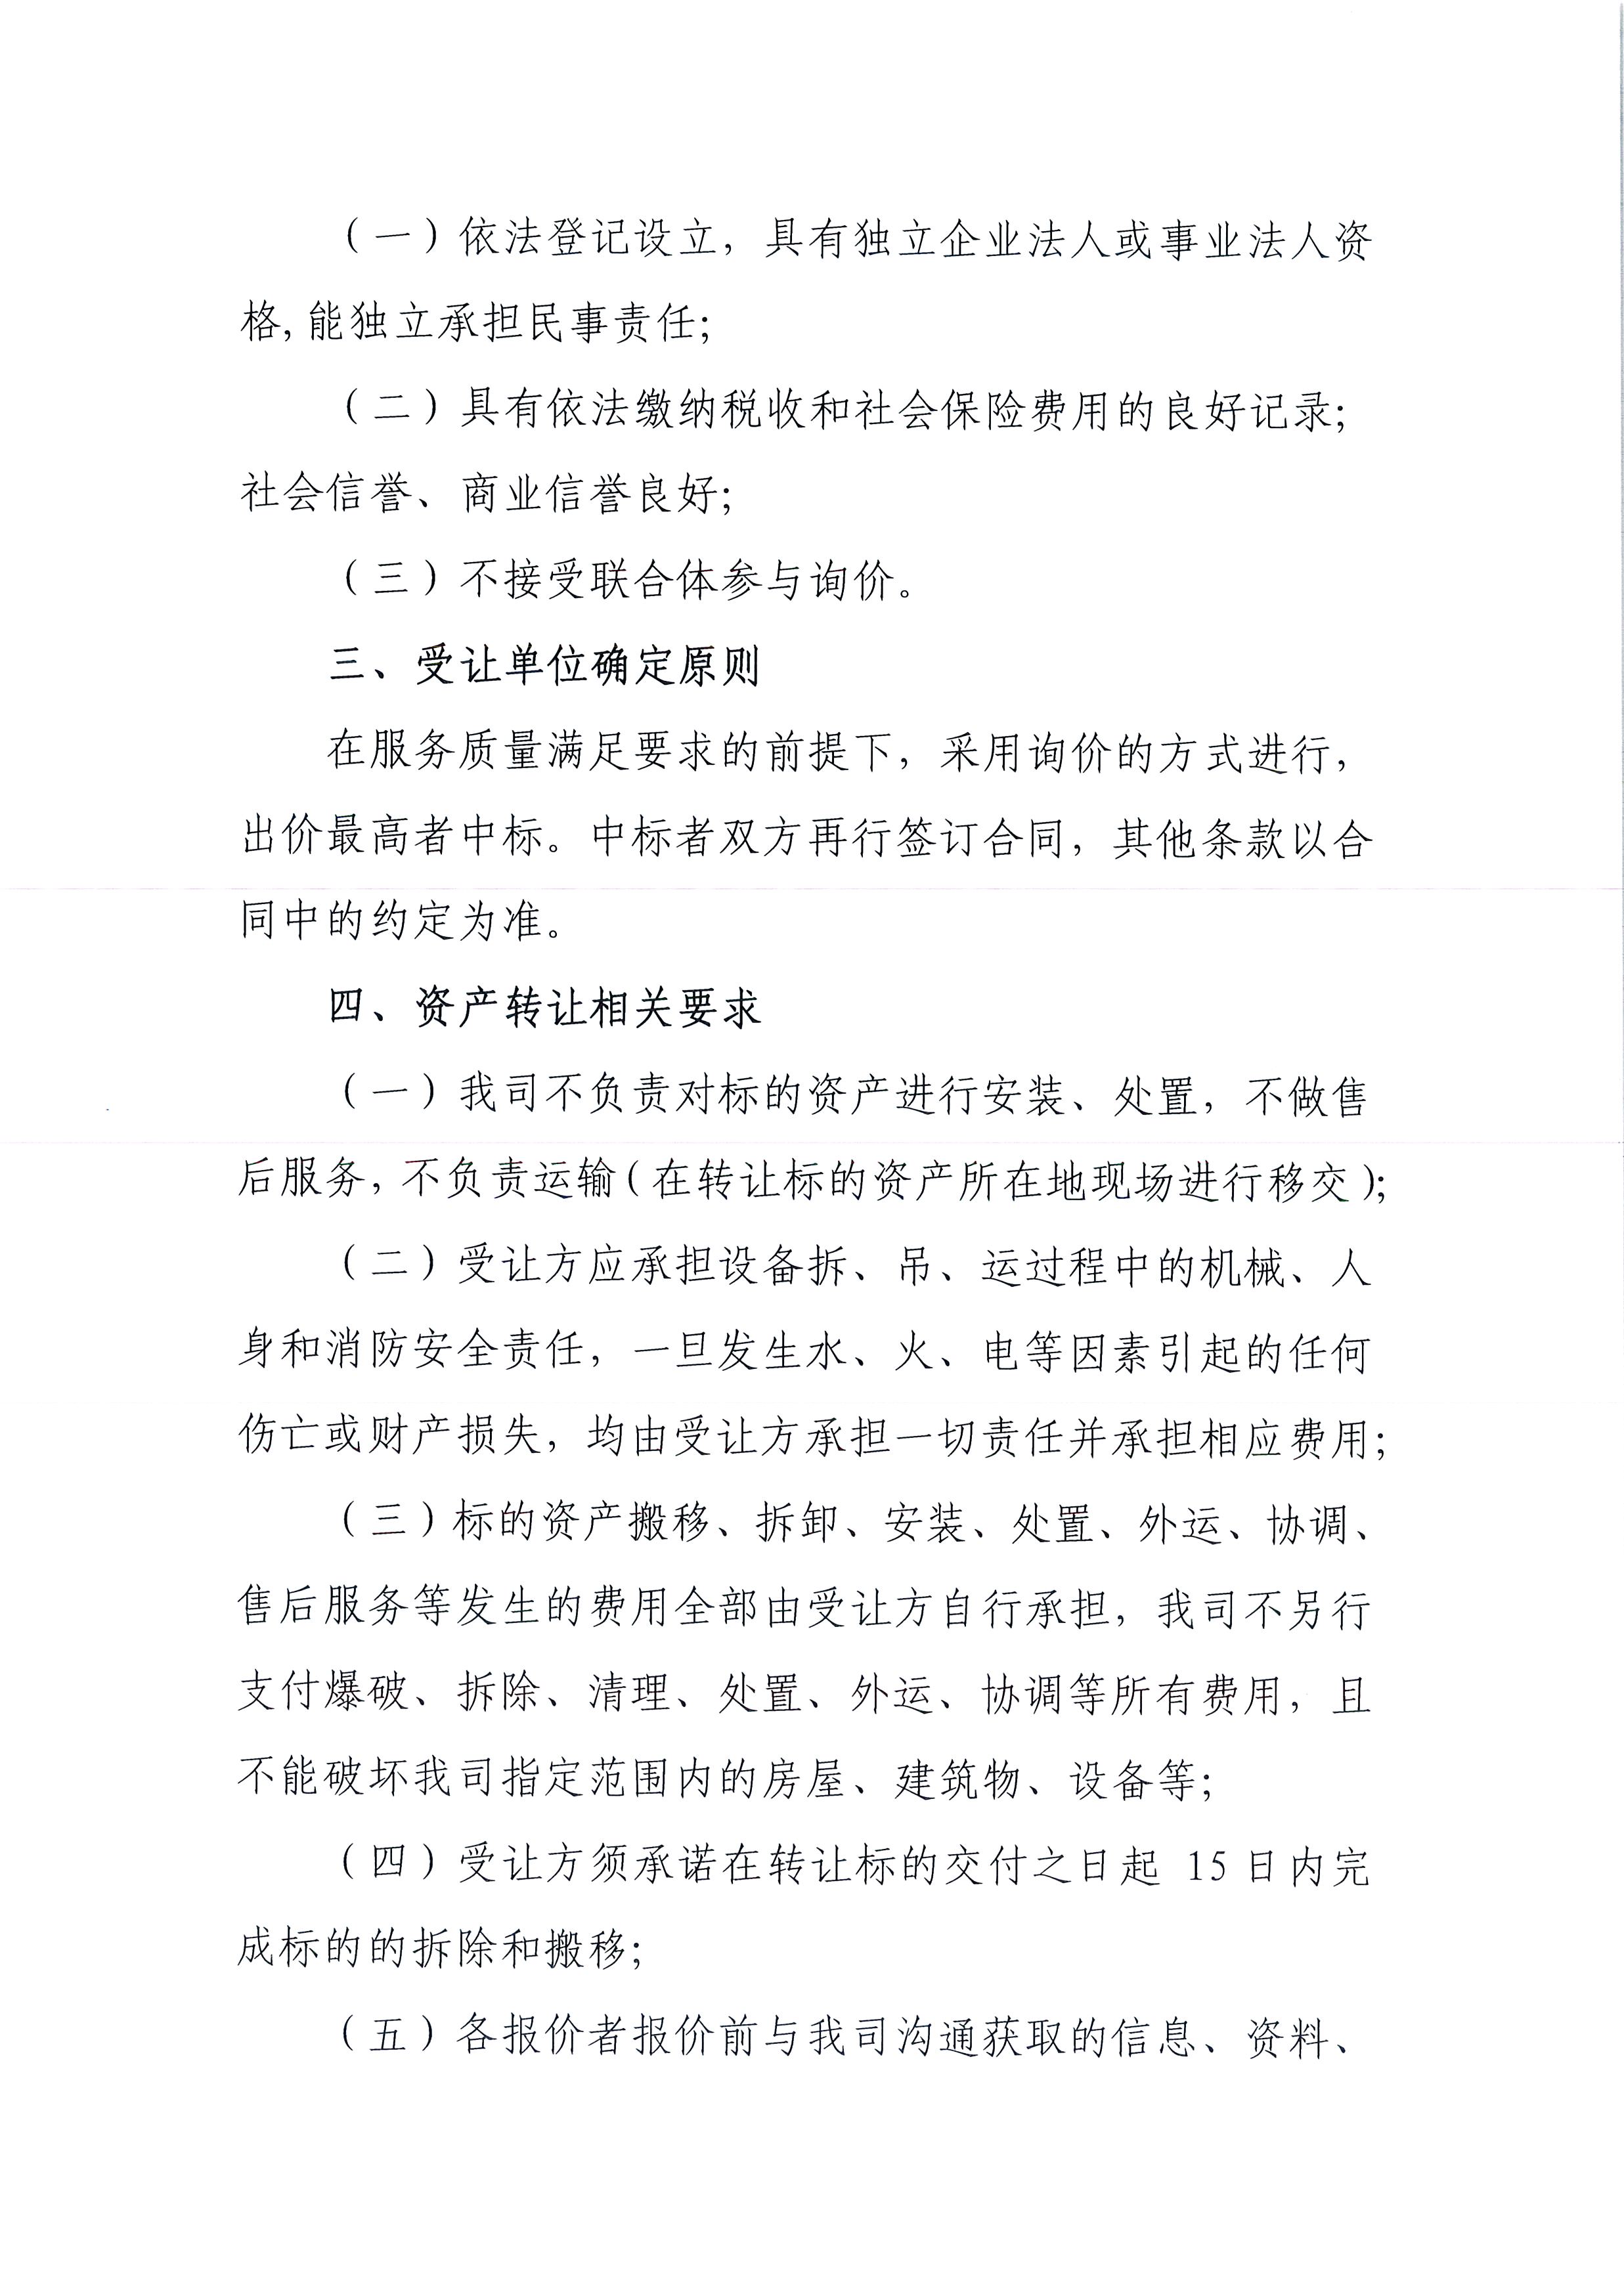 aoa体育(中国)股份有限公司关于处置一批人造草生产设备的询价函2